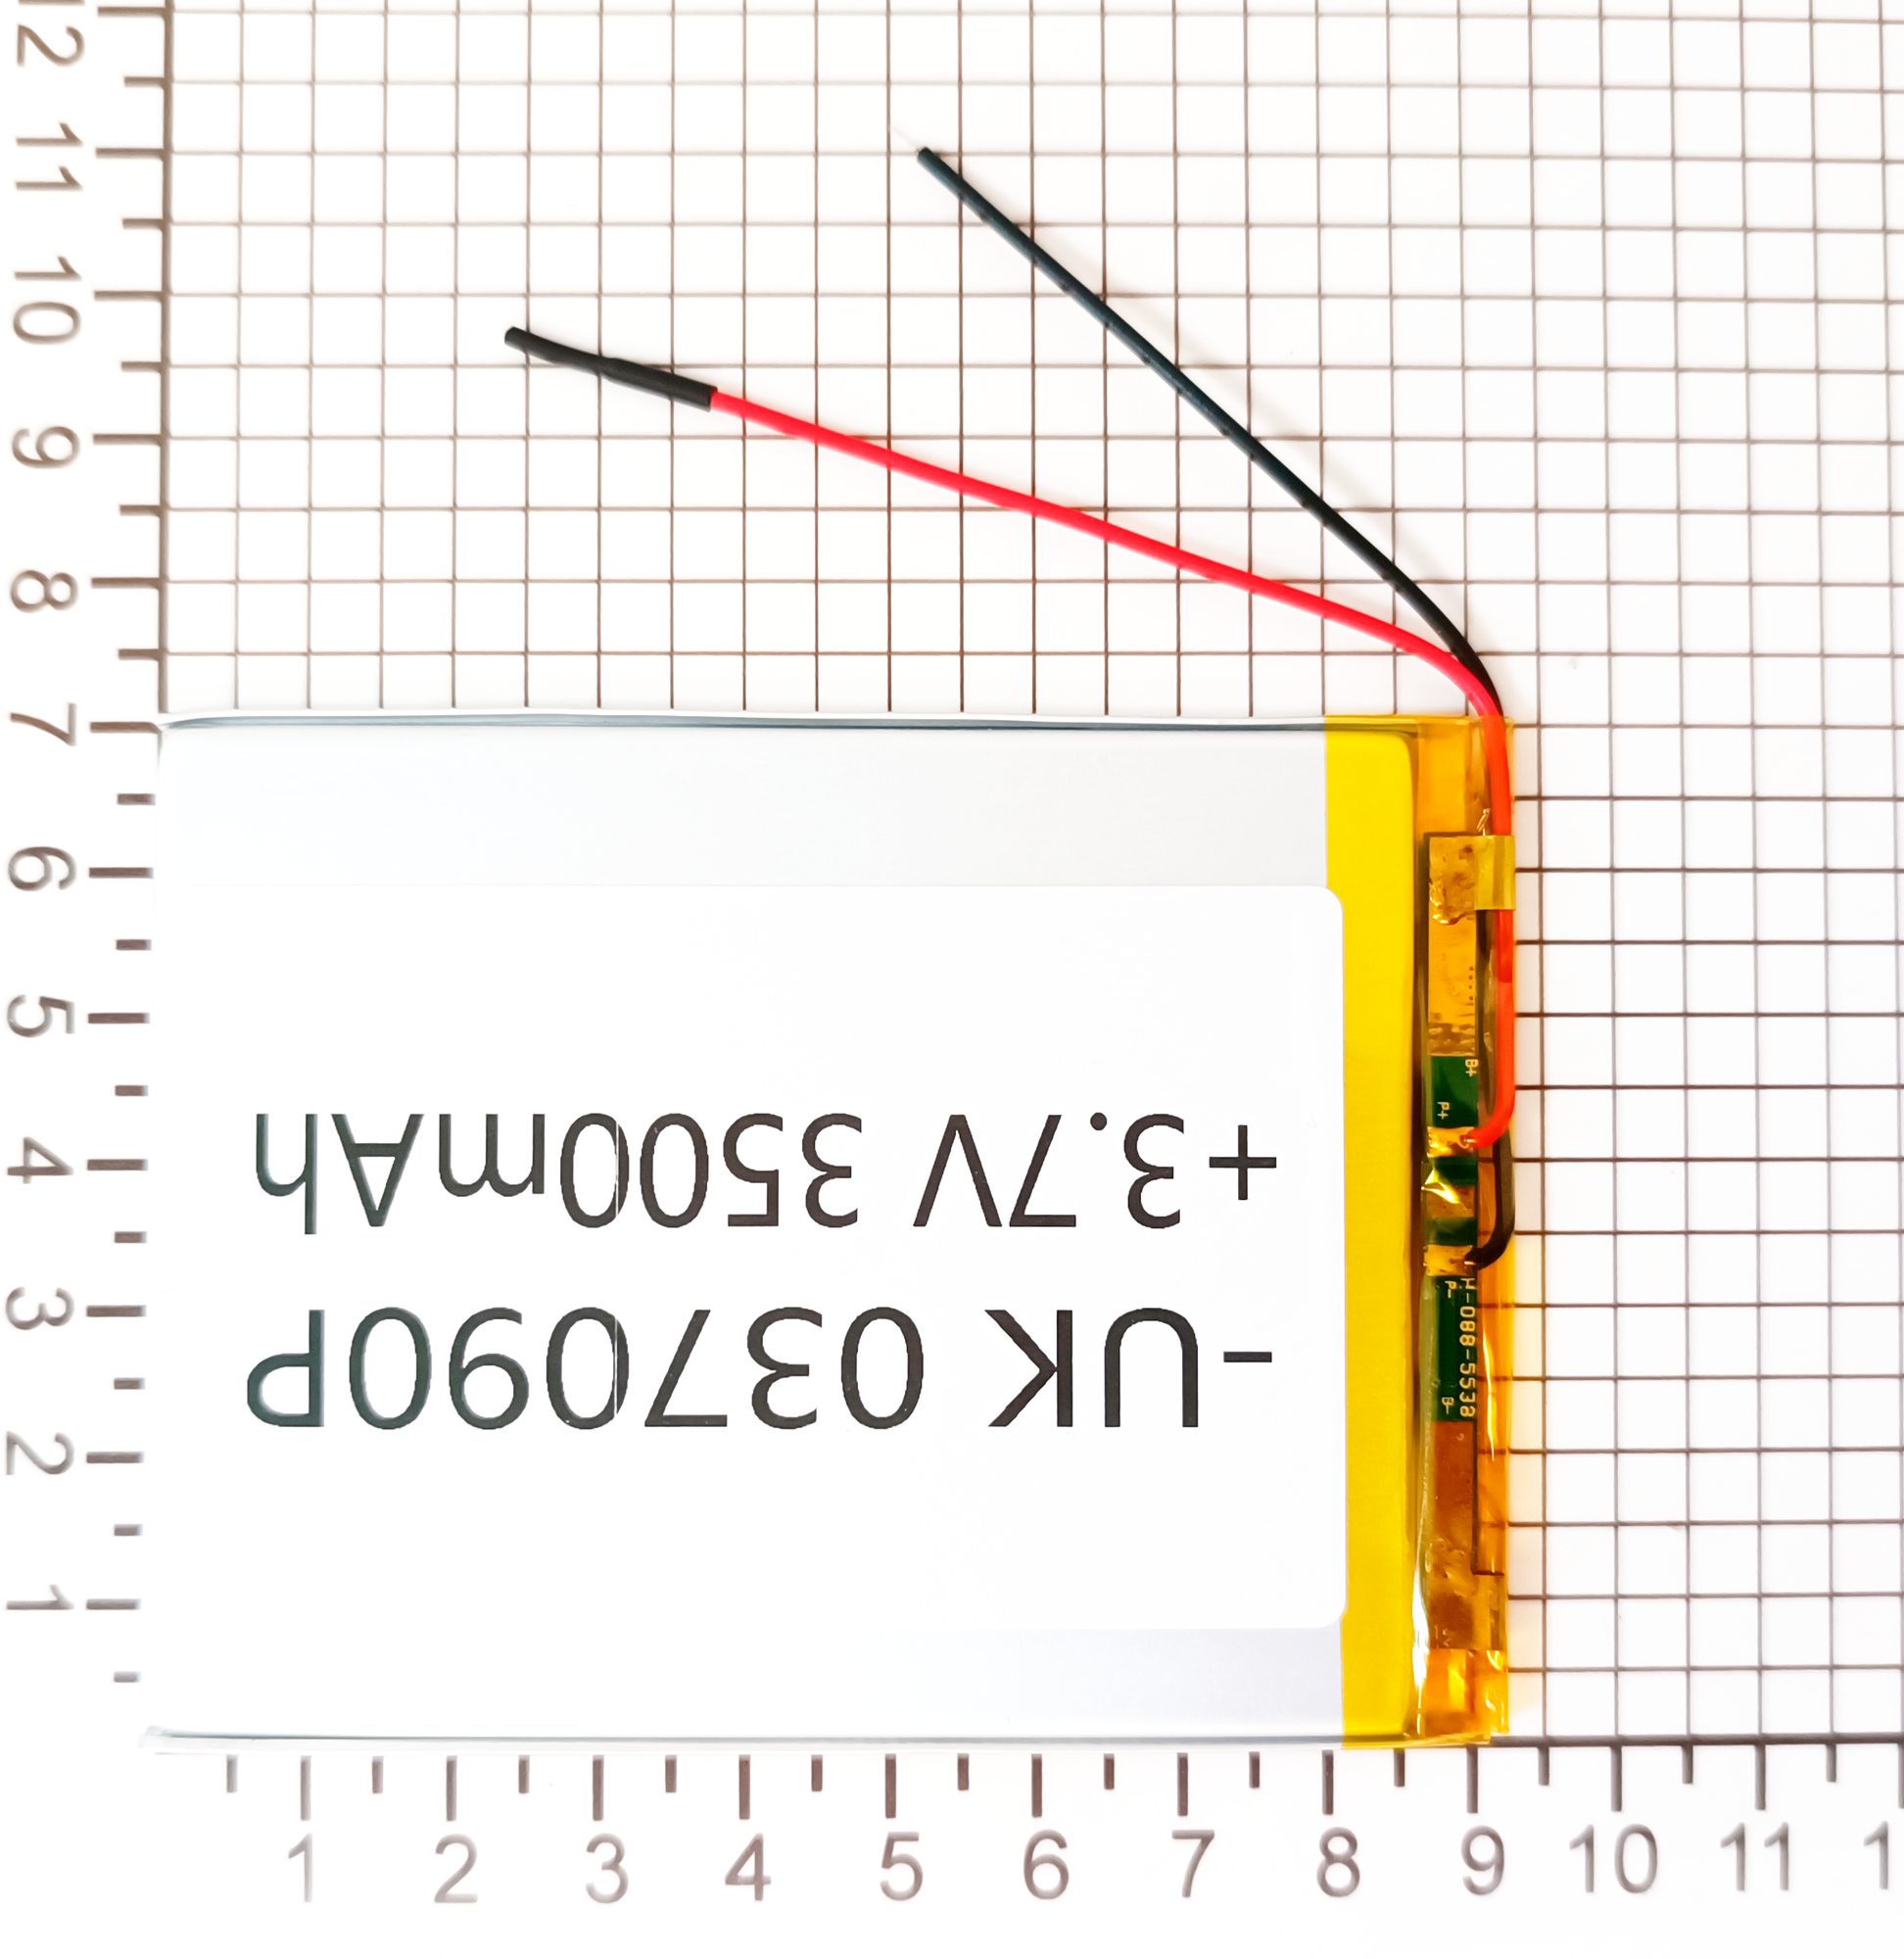 Аккумулятор для планшета Texet X-pad RAPID 7.1 4G TM-7879 (батарея) емкость до 3500mAh 3,7v (аналог) 307090 li-pol литий полимерный 2 провода